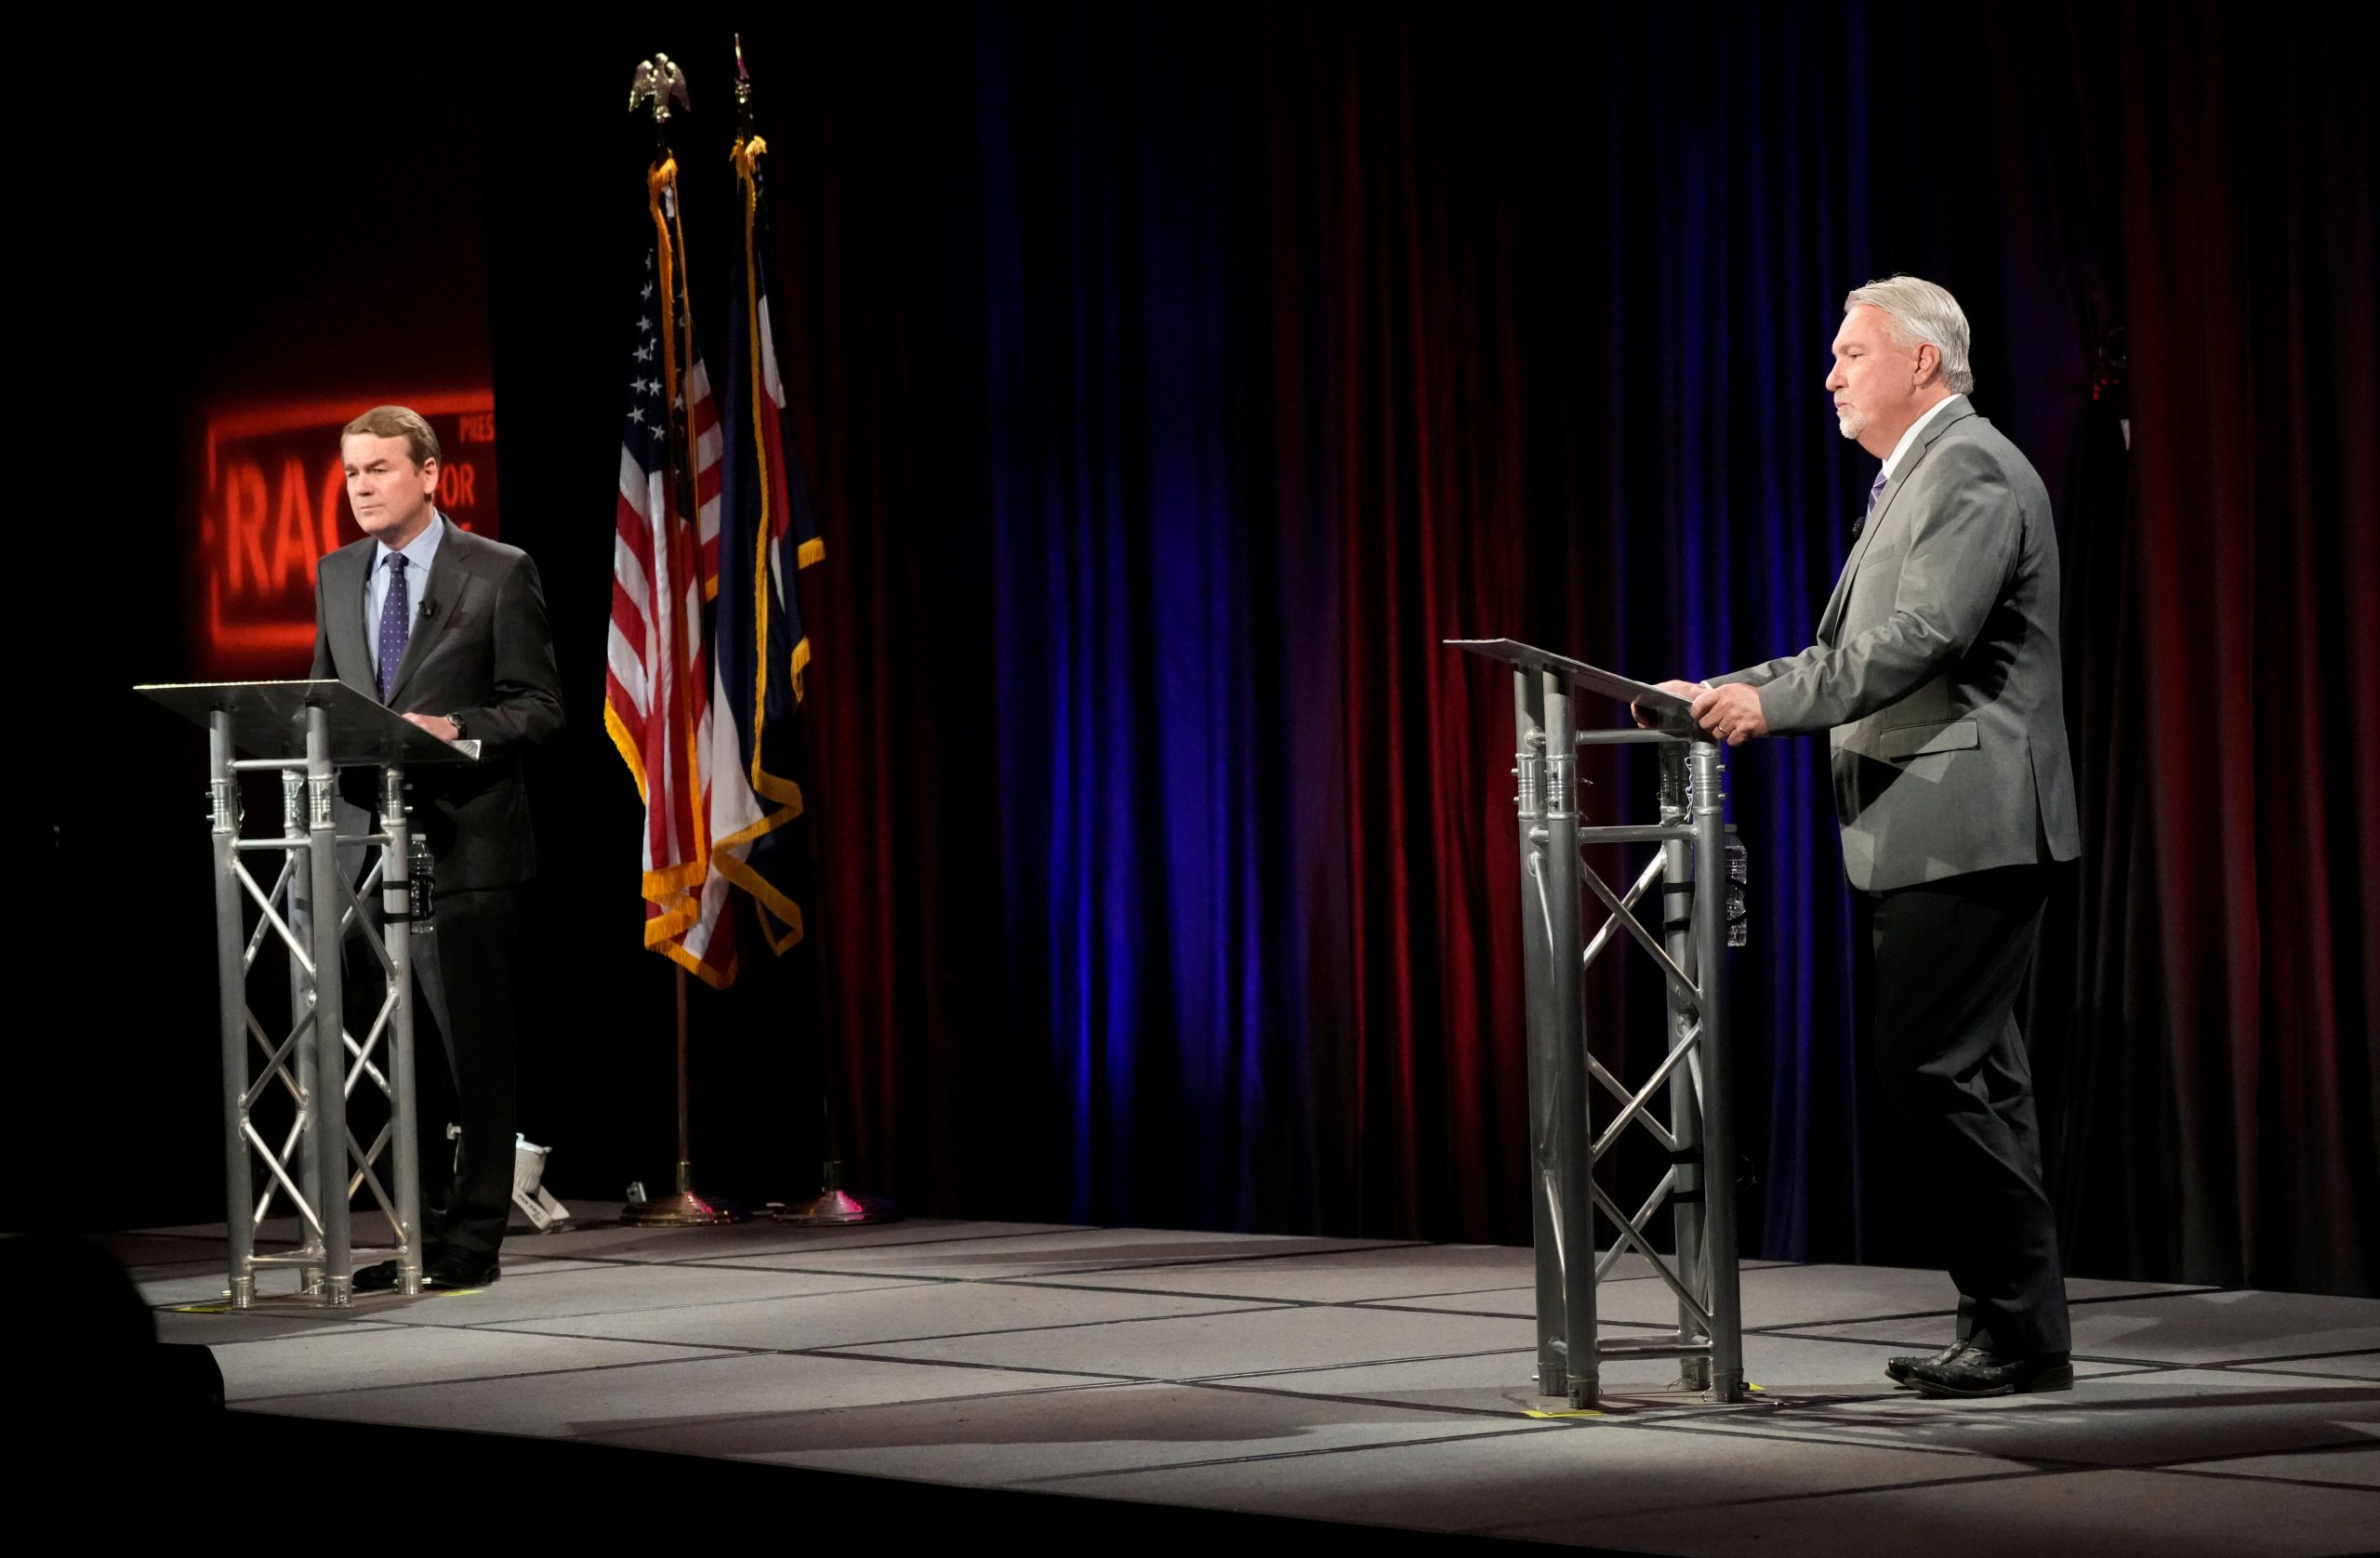 Colorado Senate debate: Michael Bennet, Joe O’Dea spar on abortion, crime and inflation